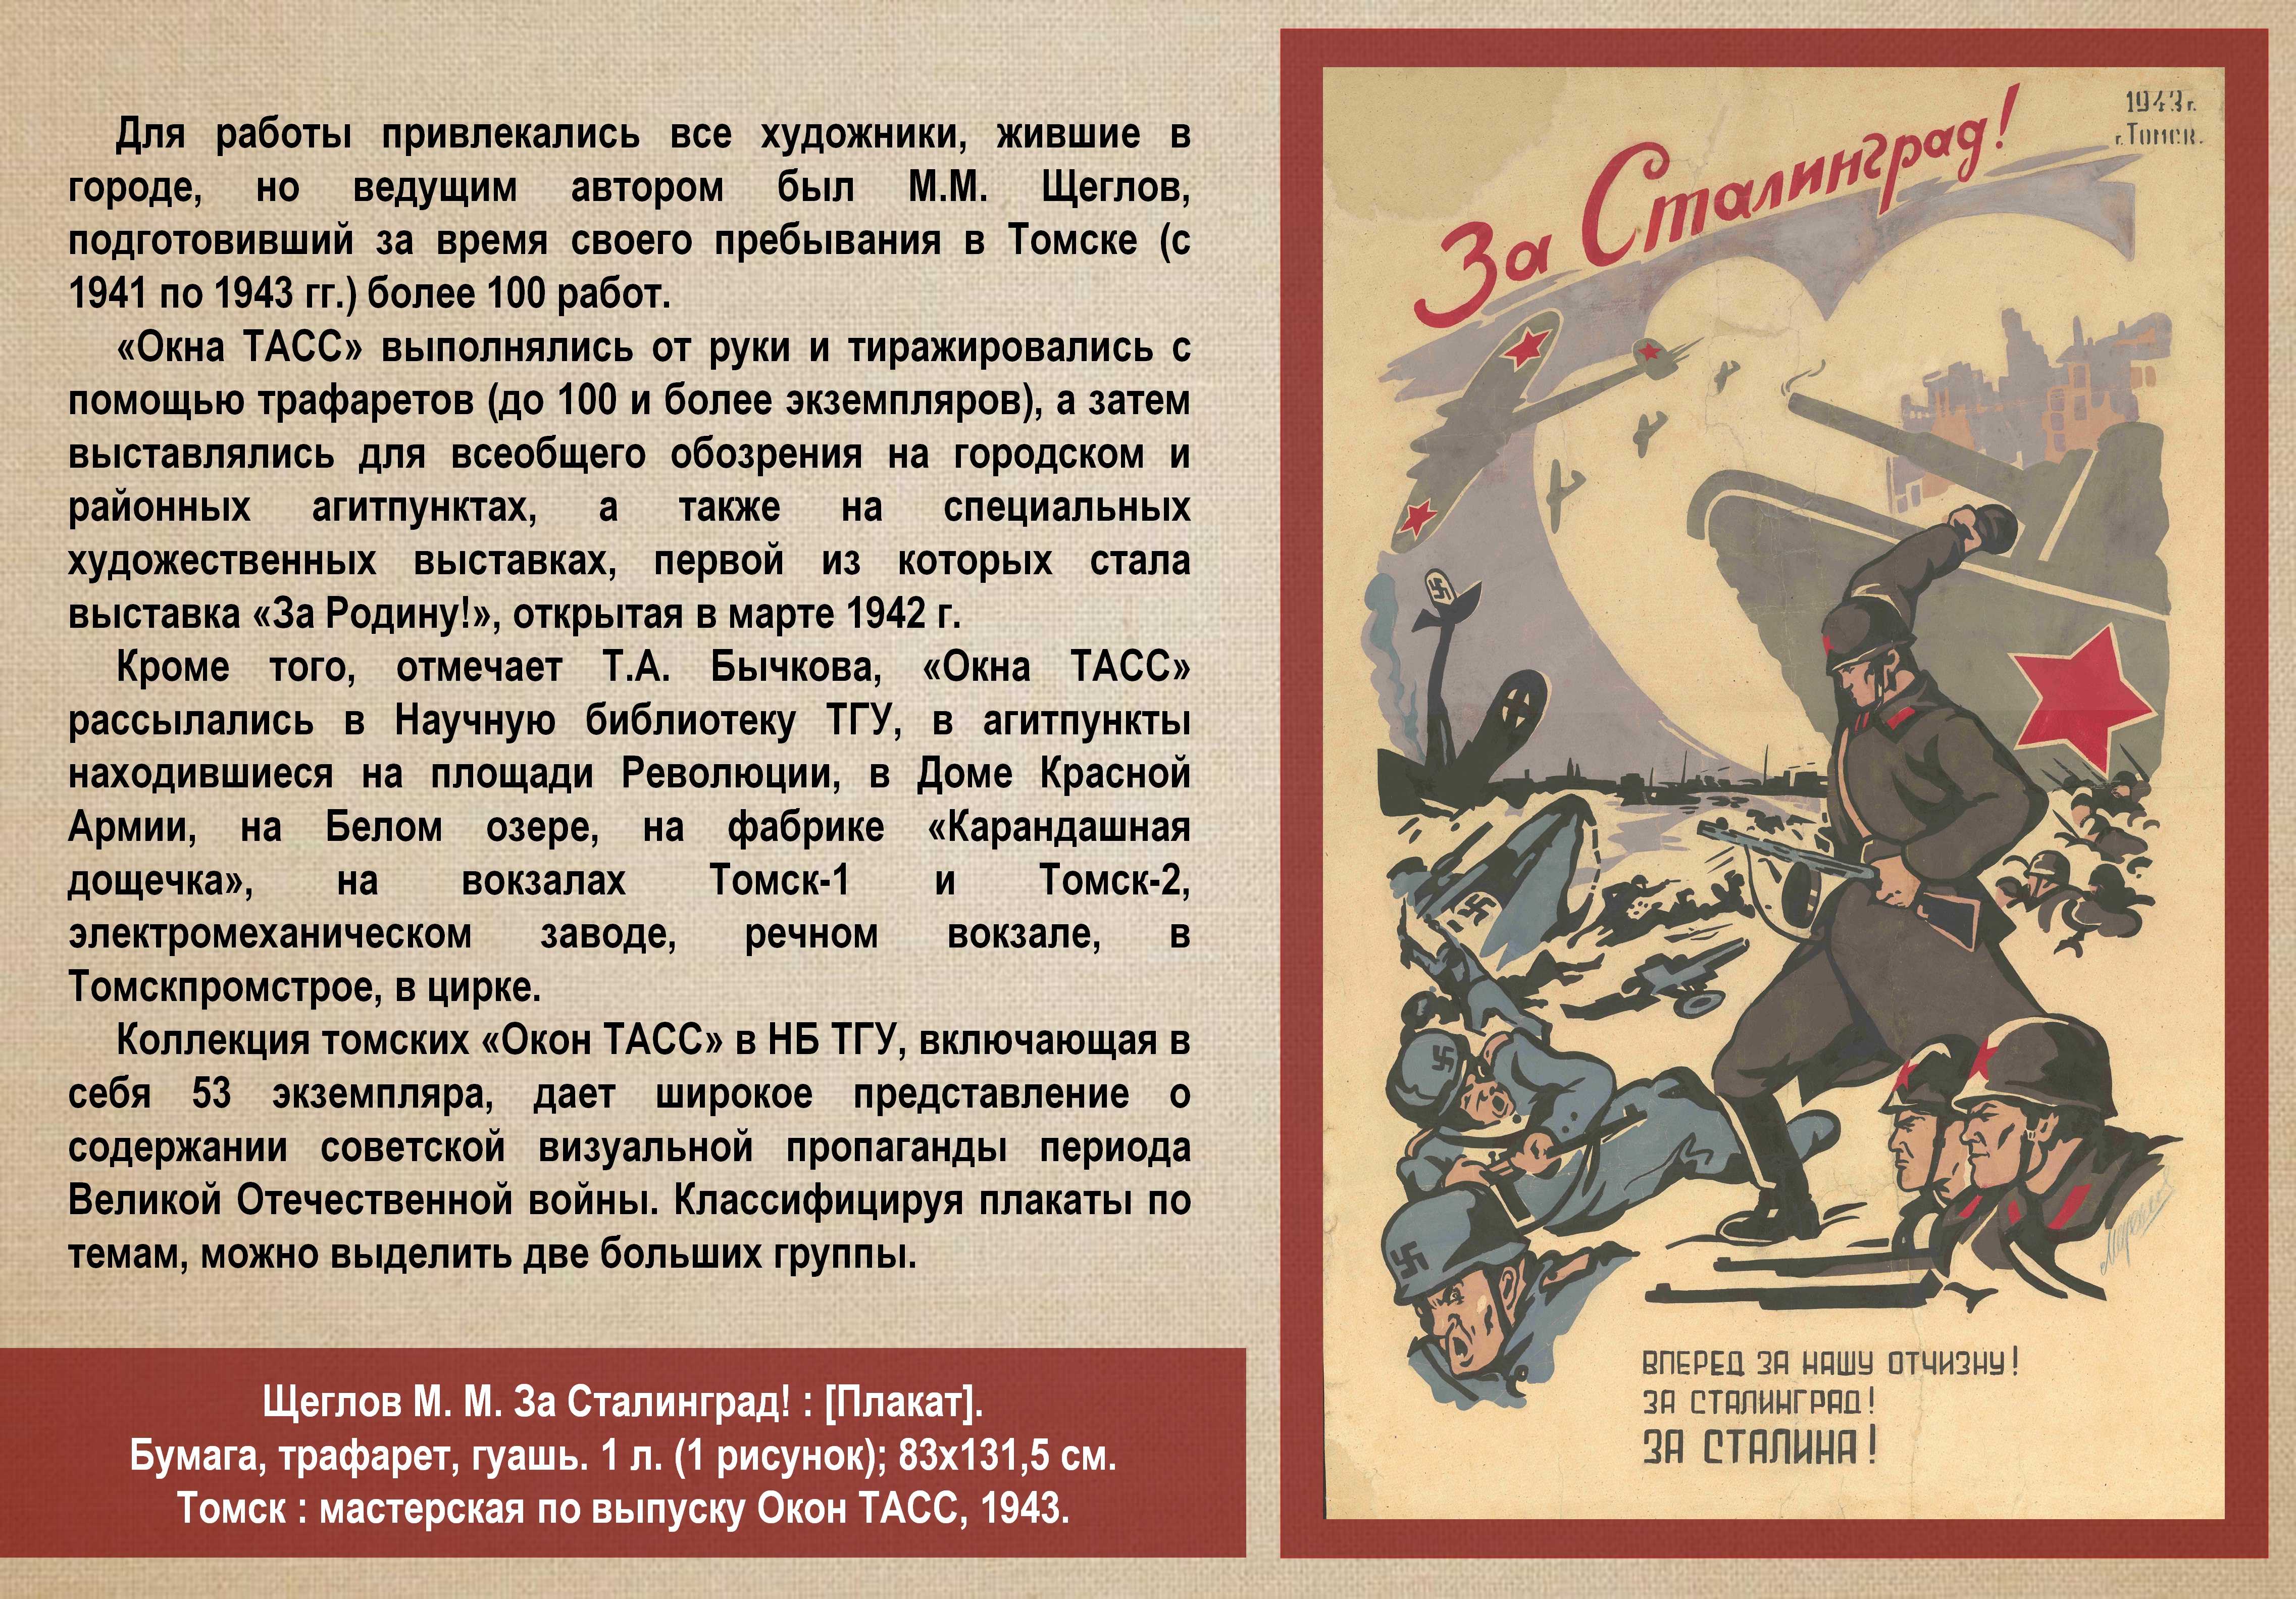 Великий подвиг текст. Великие подвиги. Сталинград плакат. Окон ТАСС 1943. Окна ТАСС Омского.